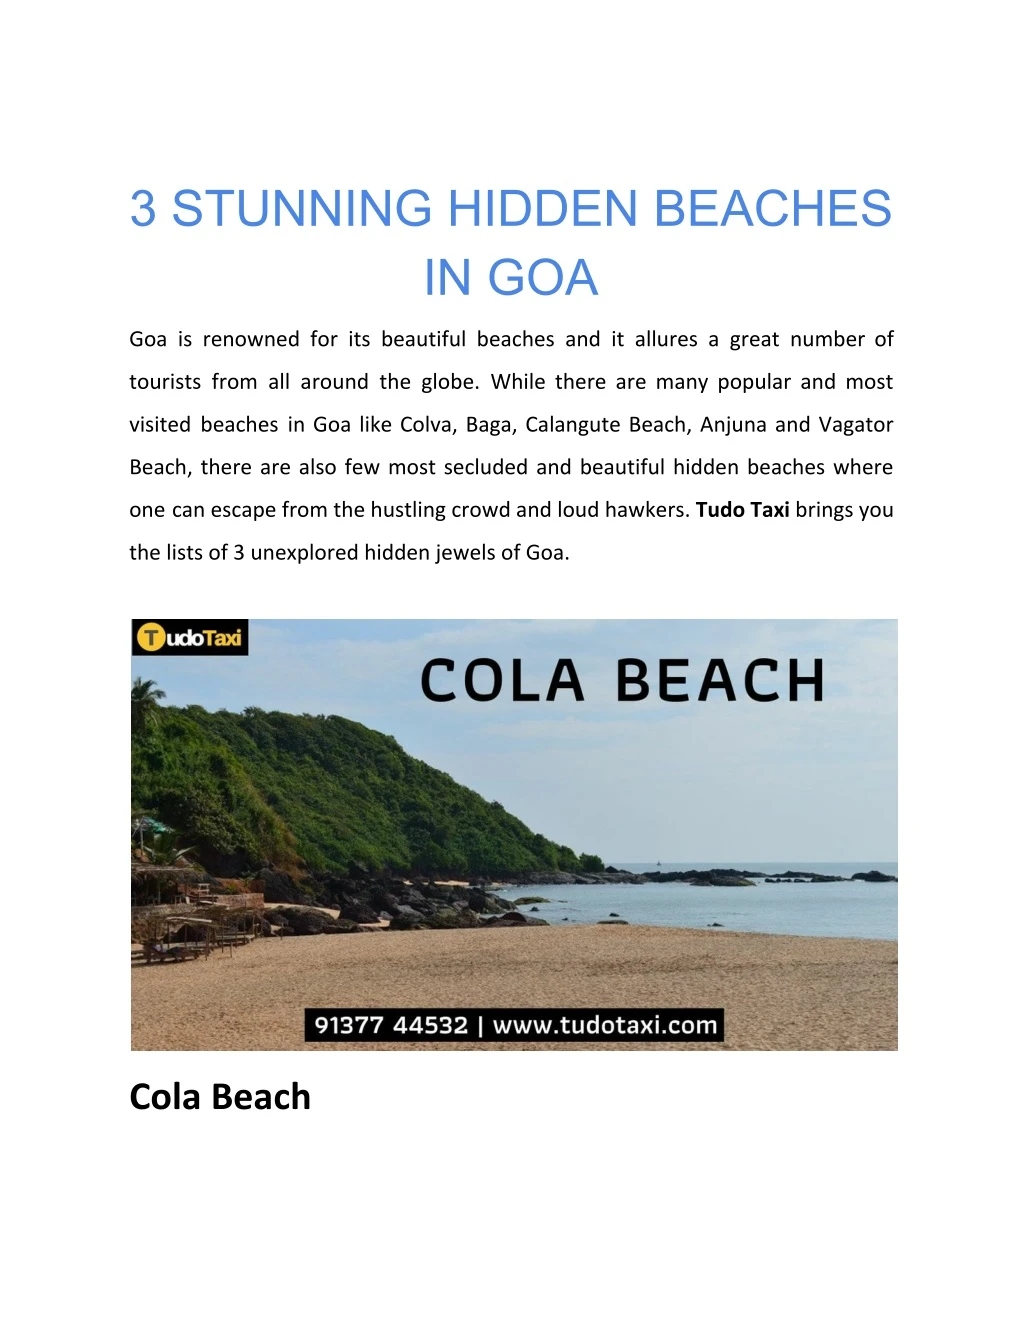 3 stunning hidden beaches in goa